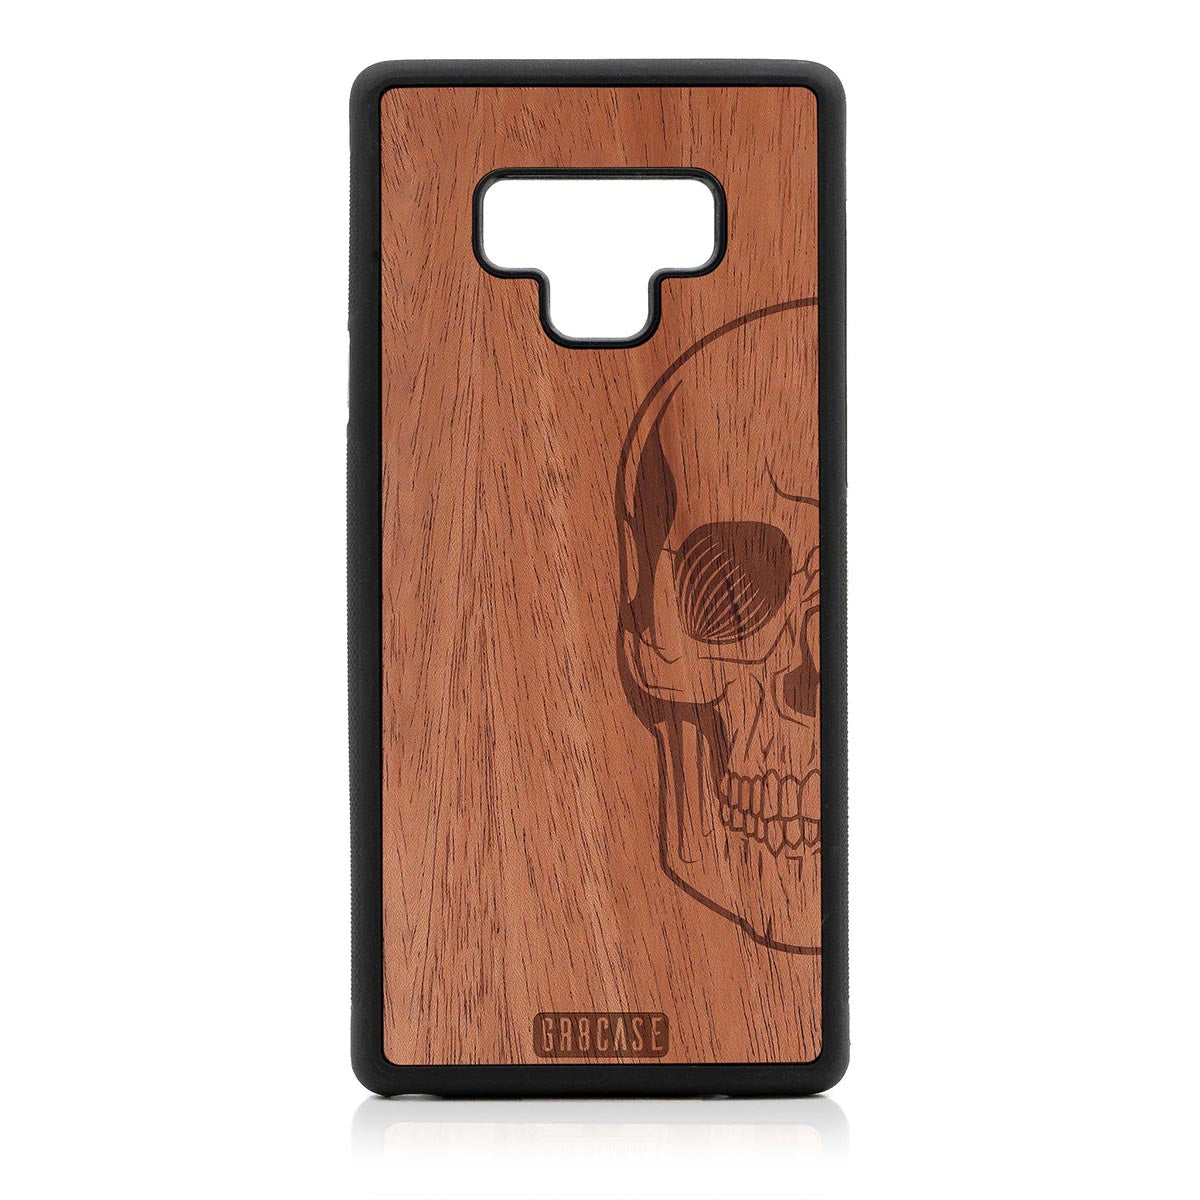 Half Skull Design Wood Case Samsung Galaxy Note 9 by GR8CASE